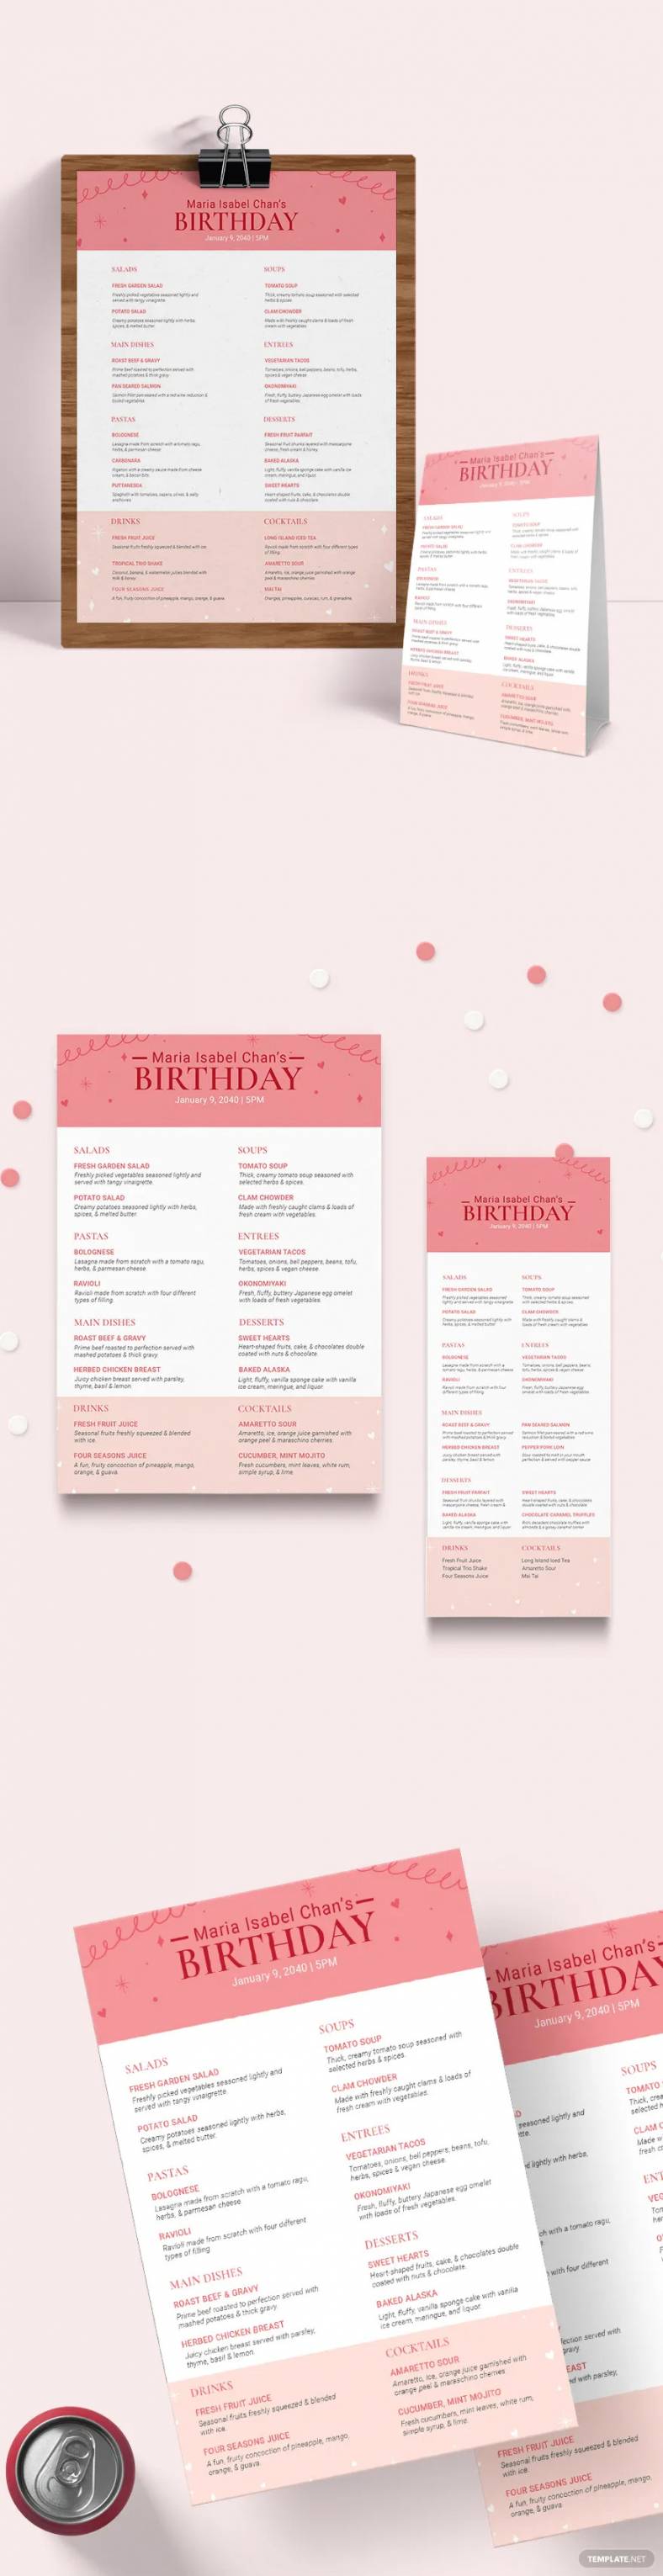 birthday-menus-788x3062